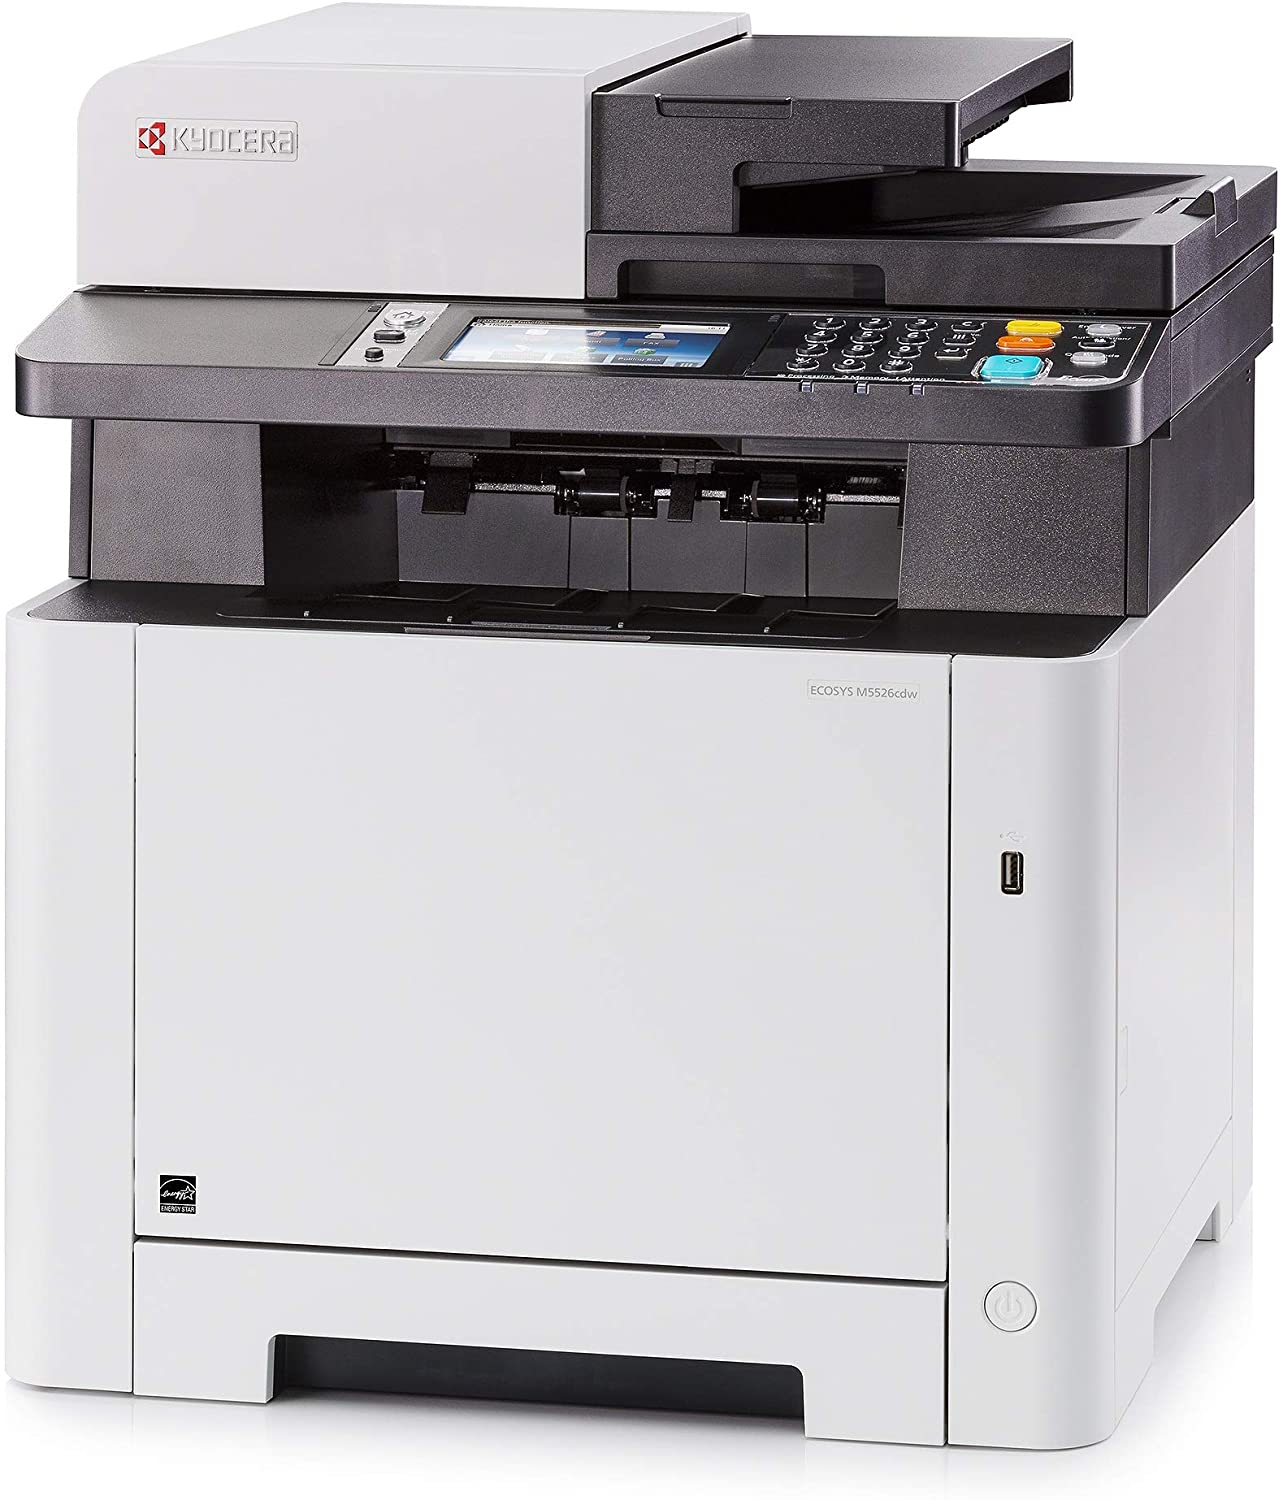 Alquiler impresora precio por copia 26 ppm